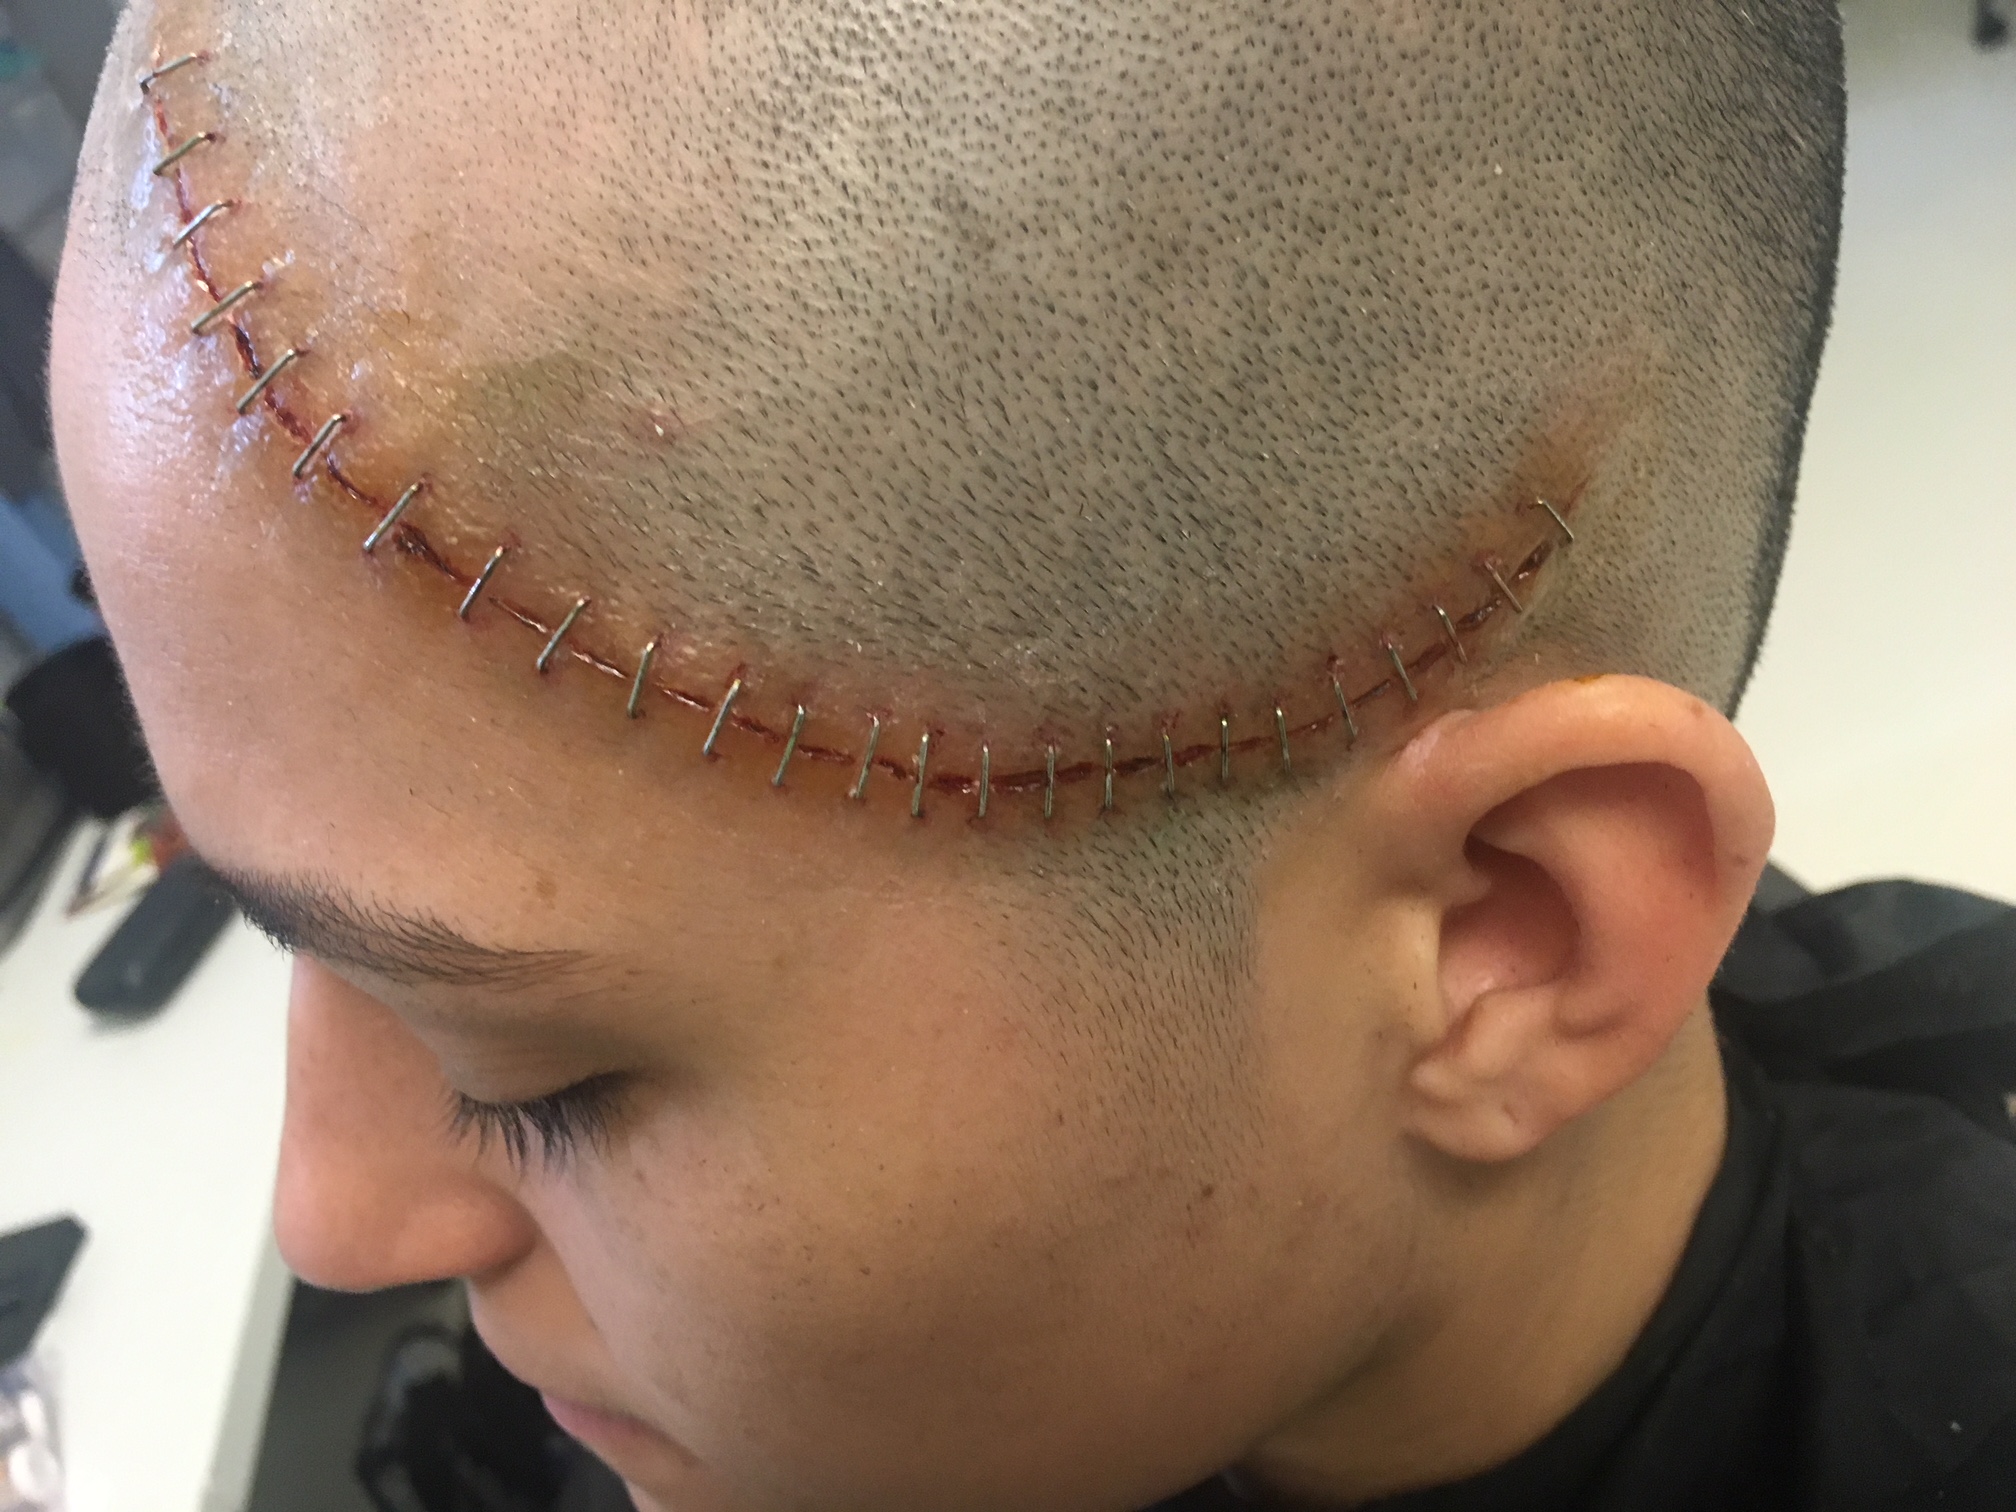 Painted 'brain surgery scar'